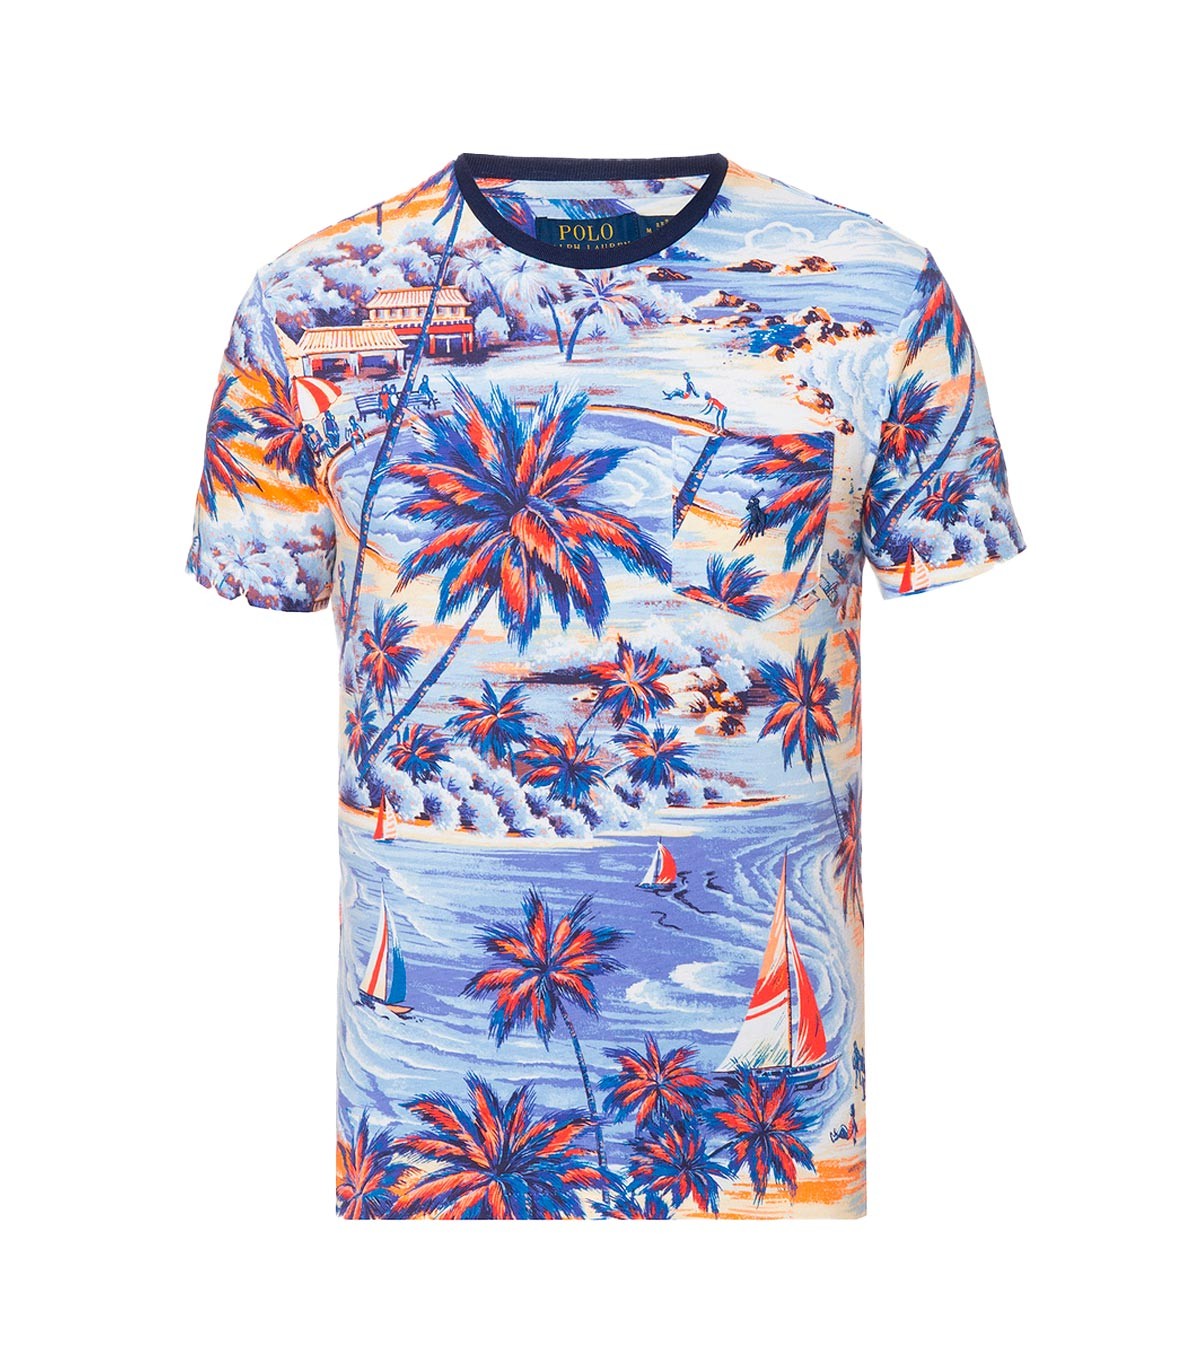 Polo Ralph Lauren - Camiseta Resort - MULTI